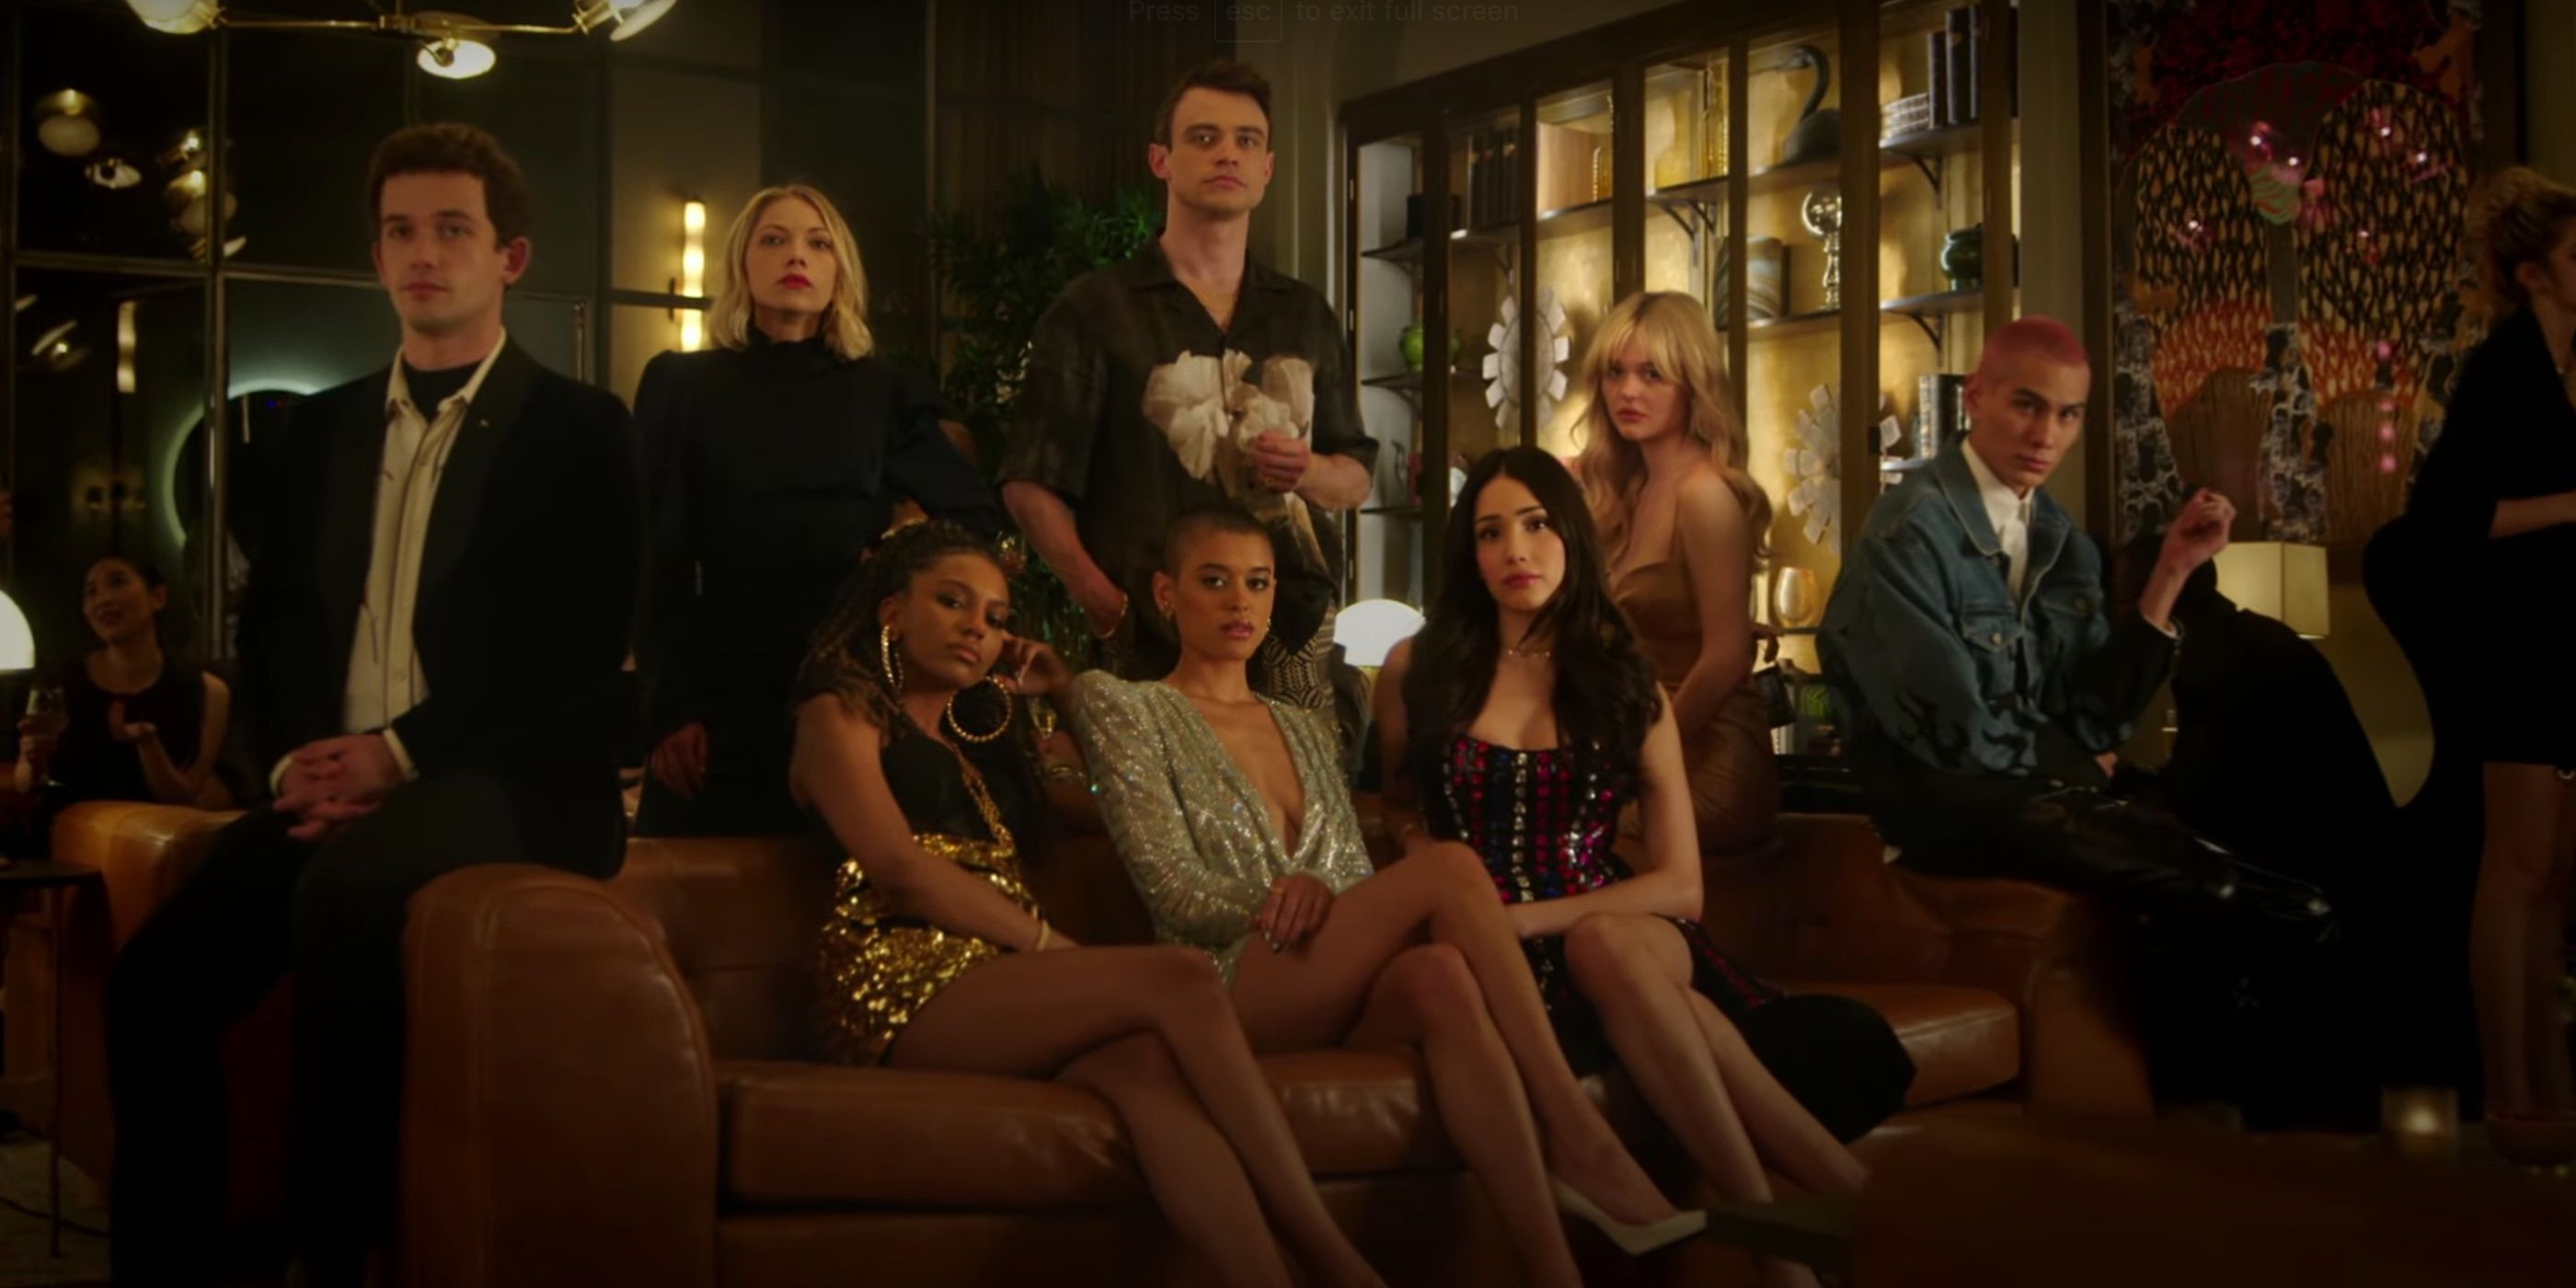 Gossip Girl Trailer Teases An Edgier Sexier Reboot On Hbo Max